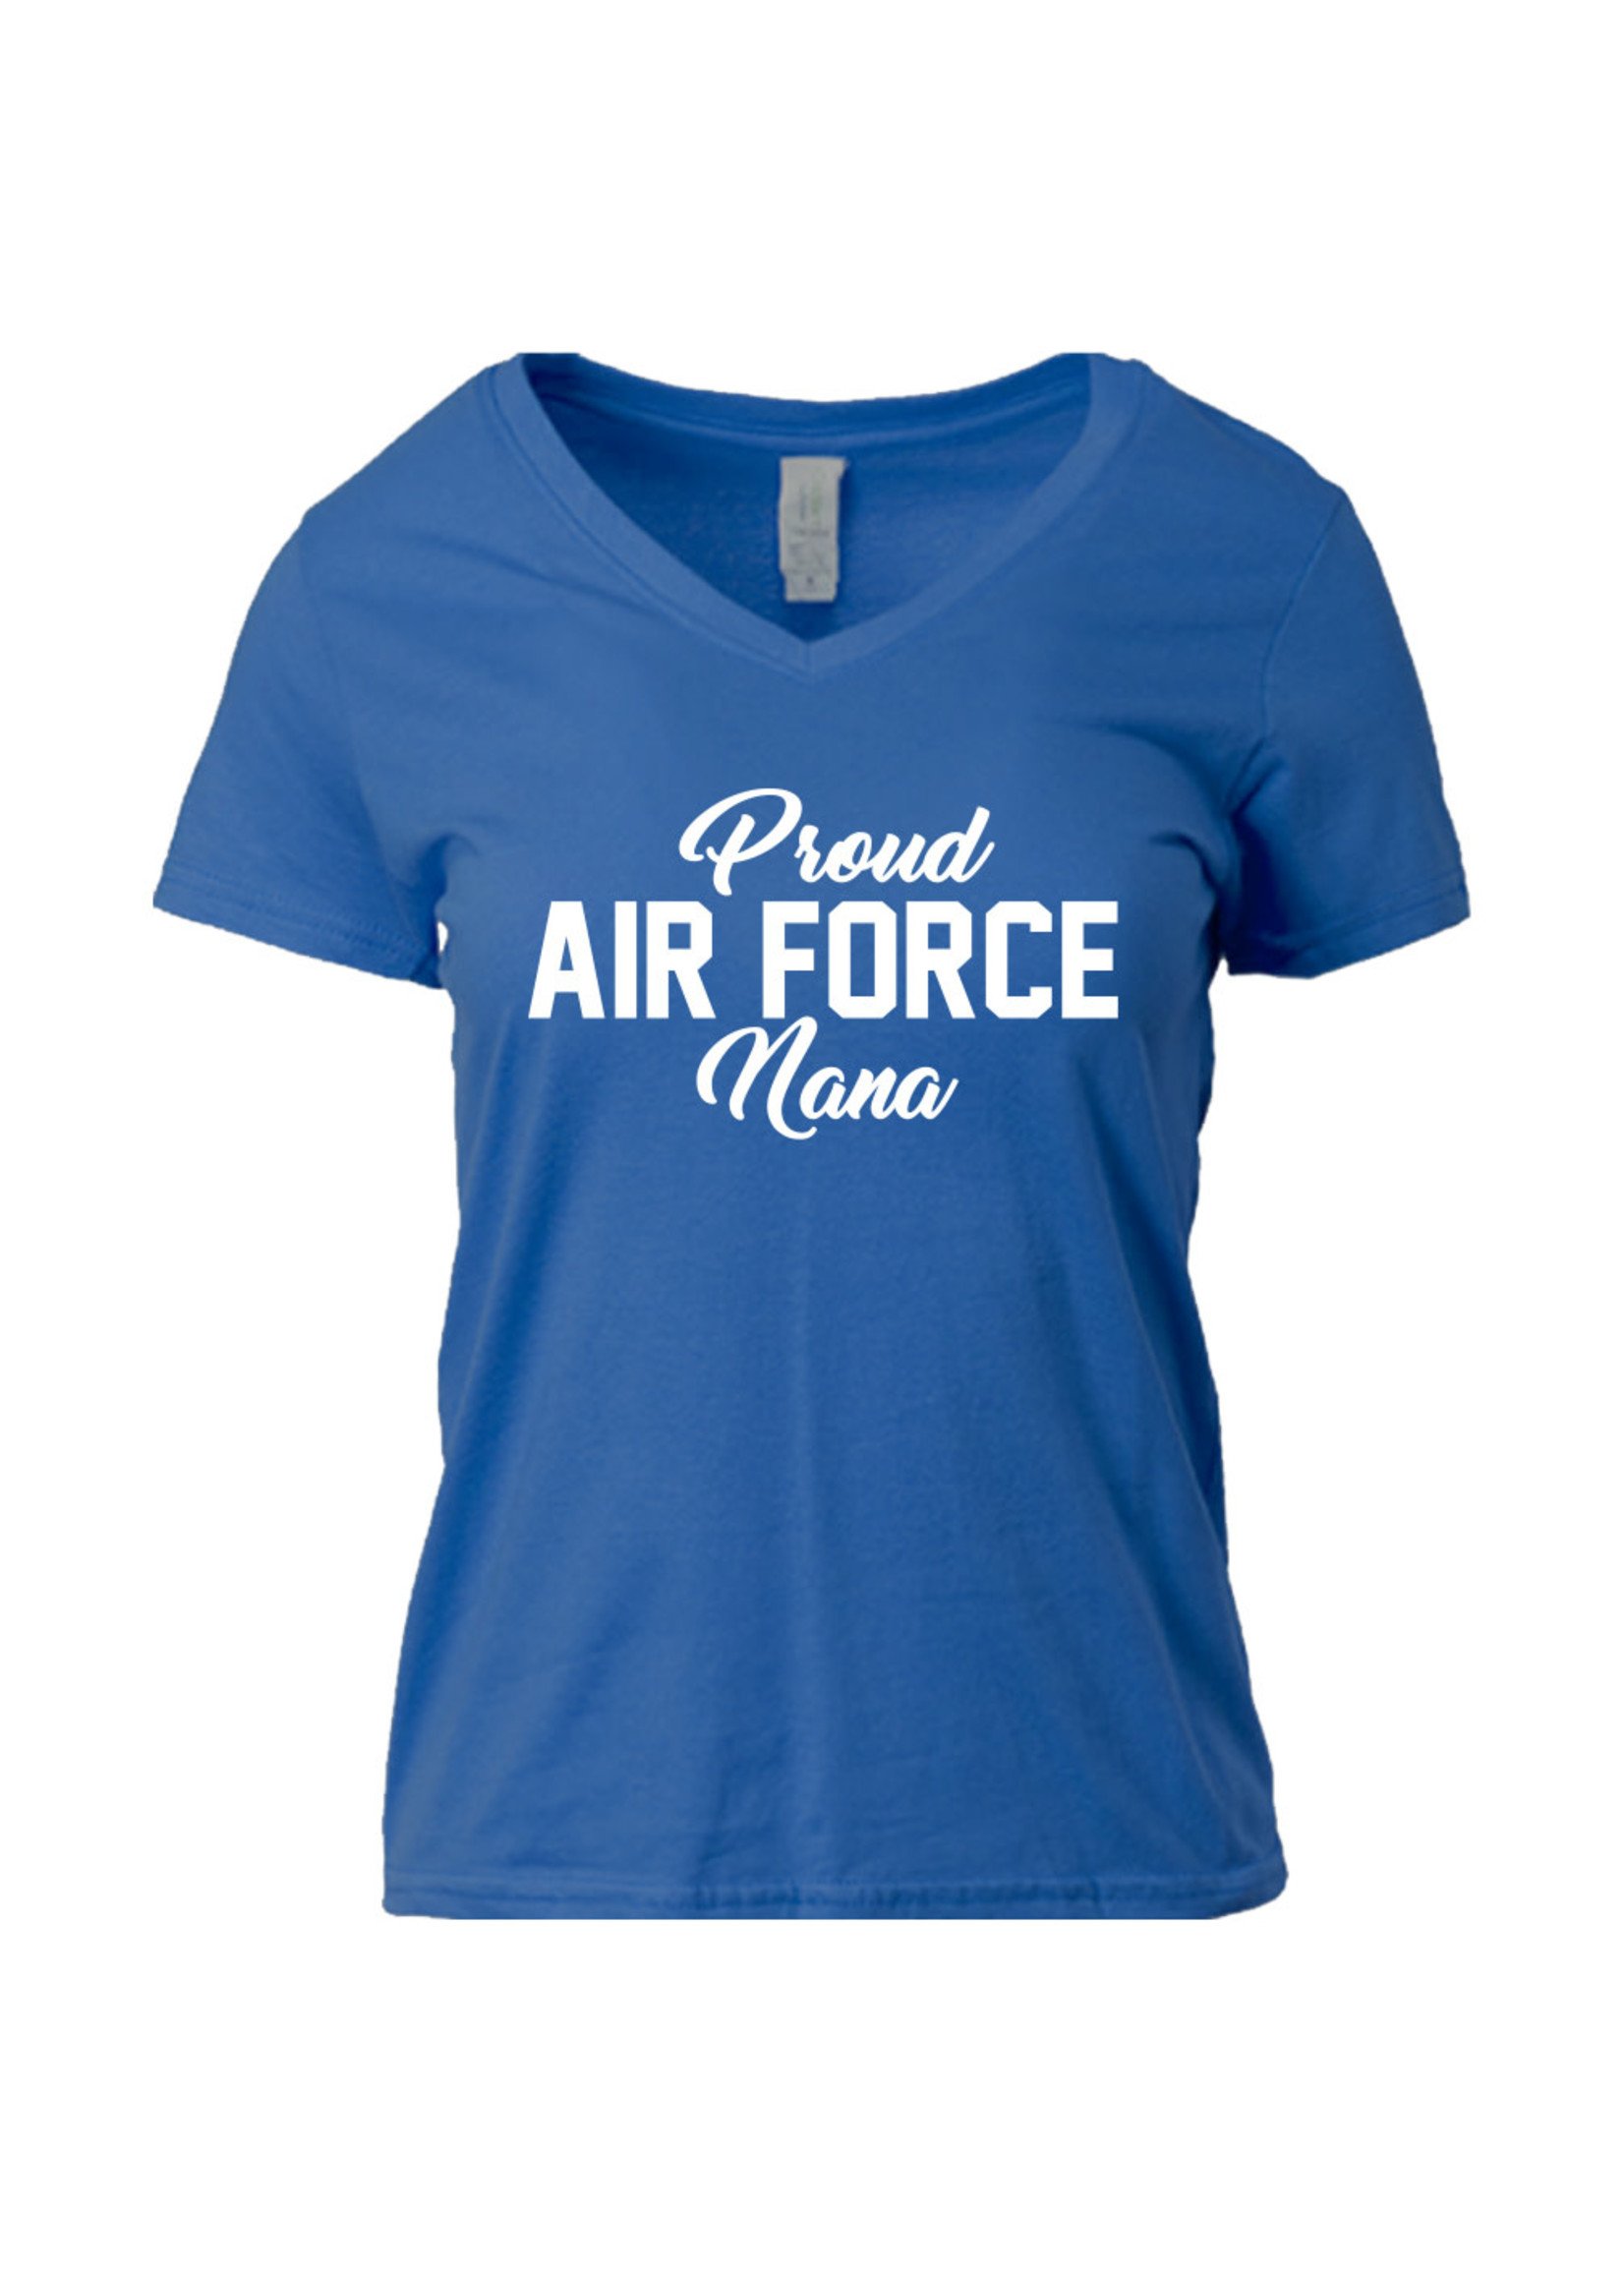 #50 - Air Force Nana